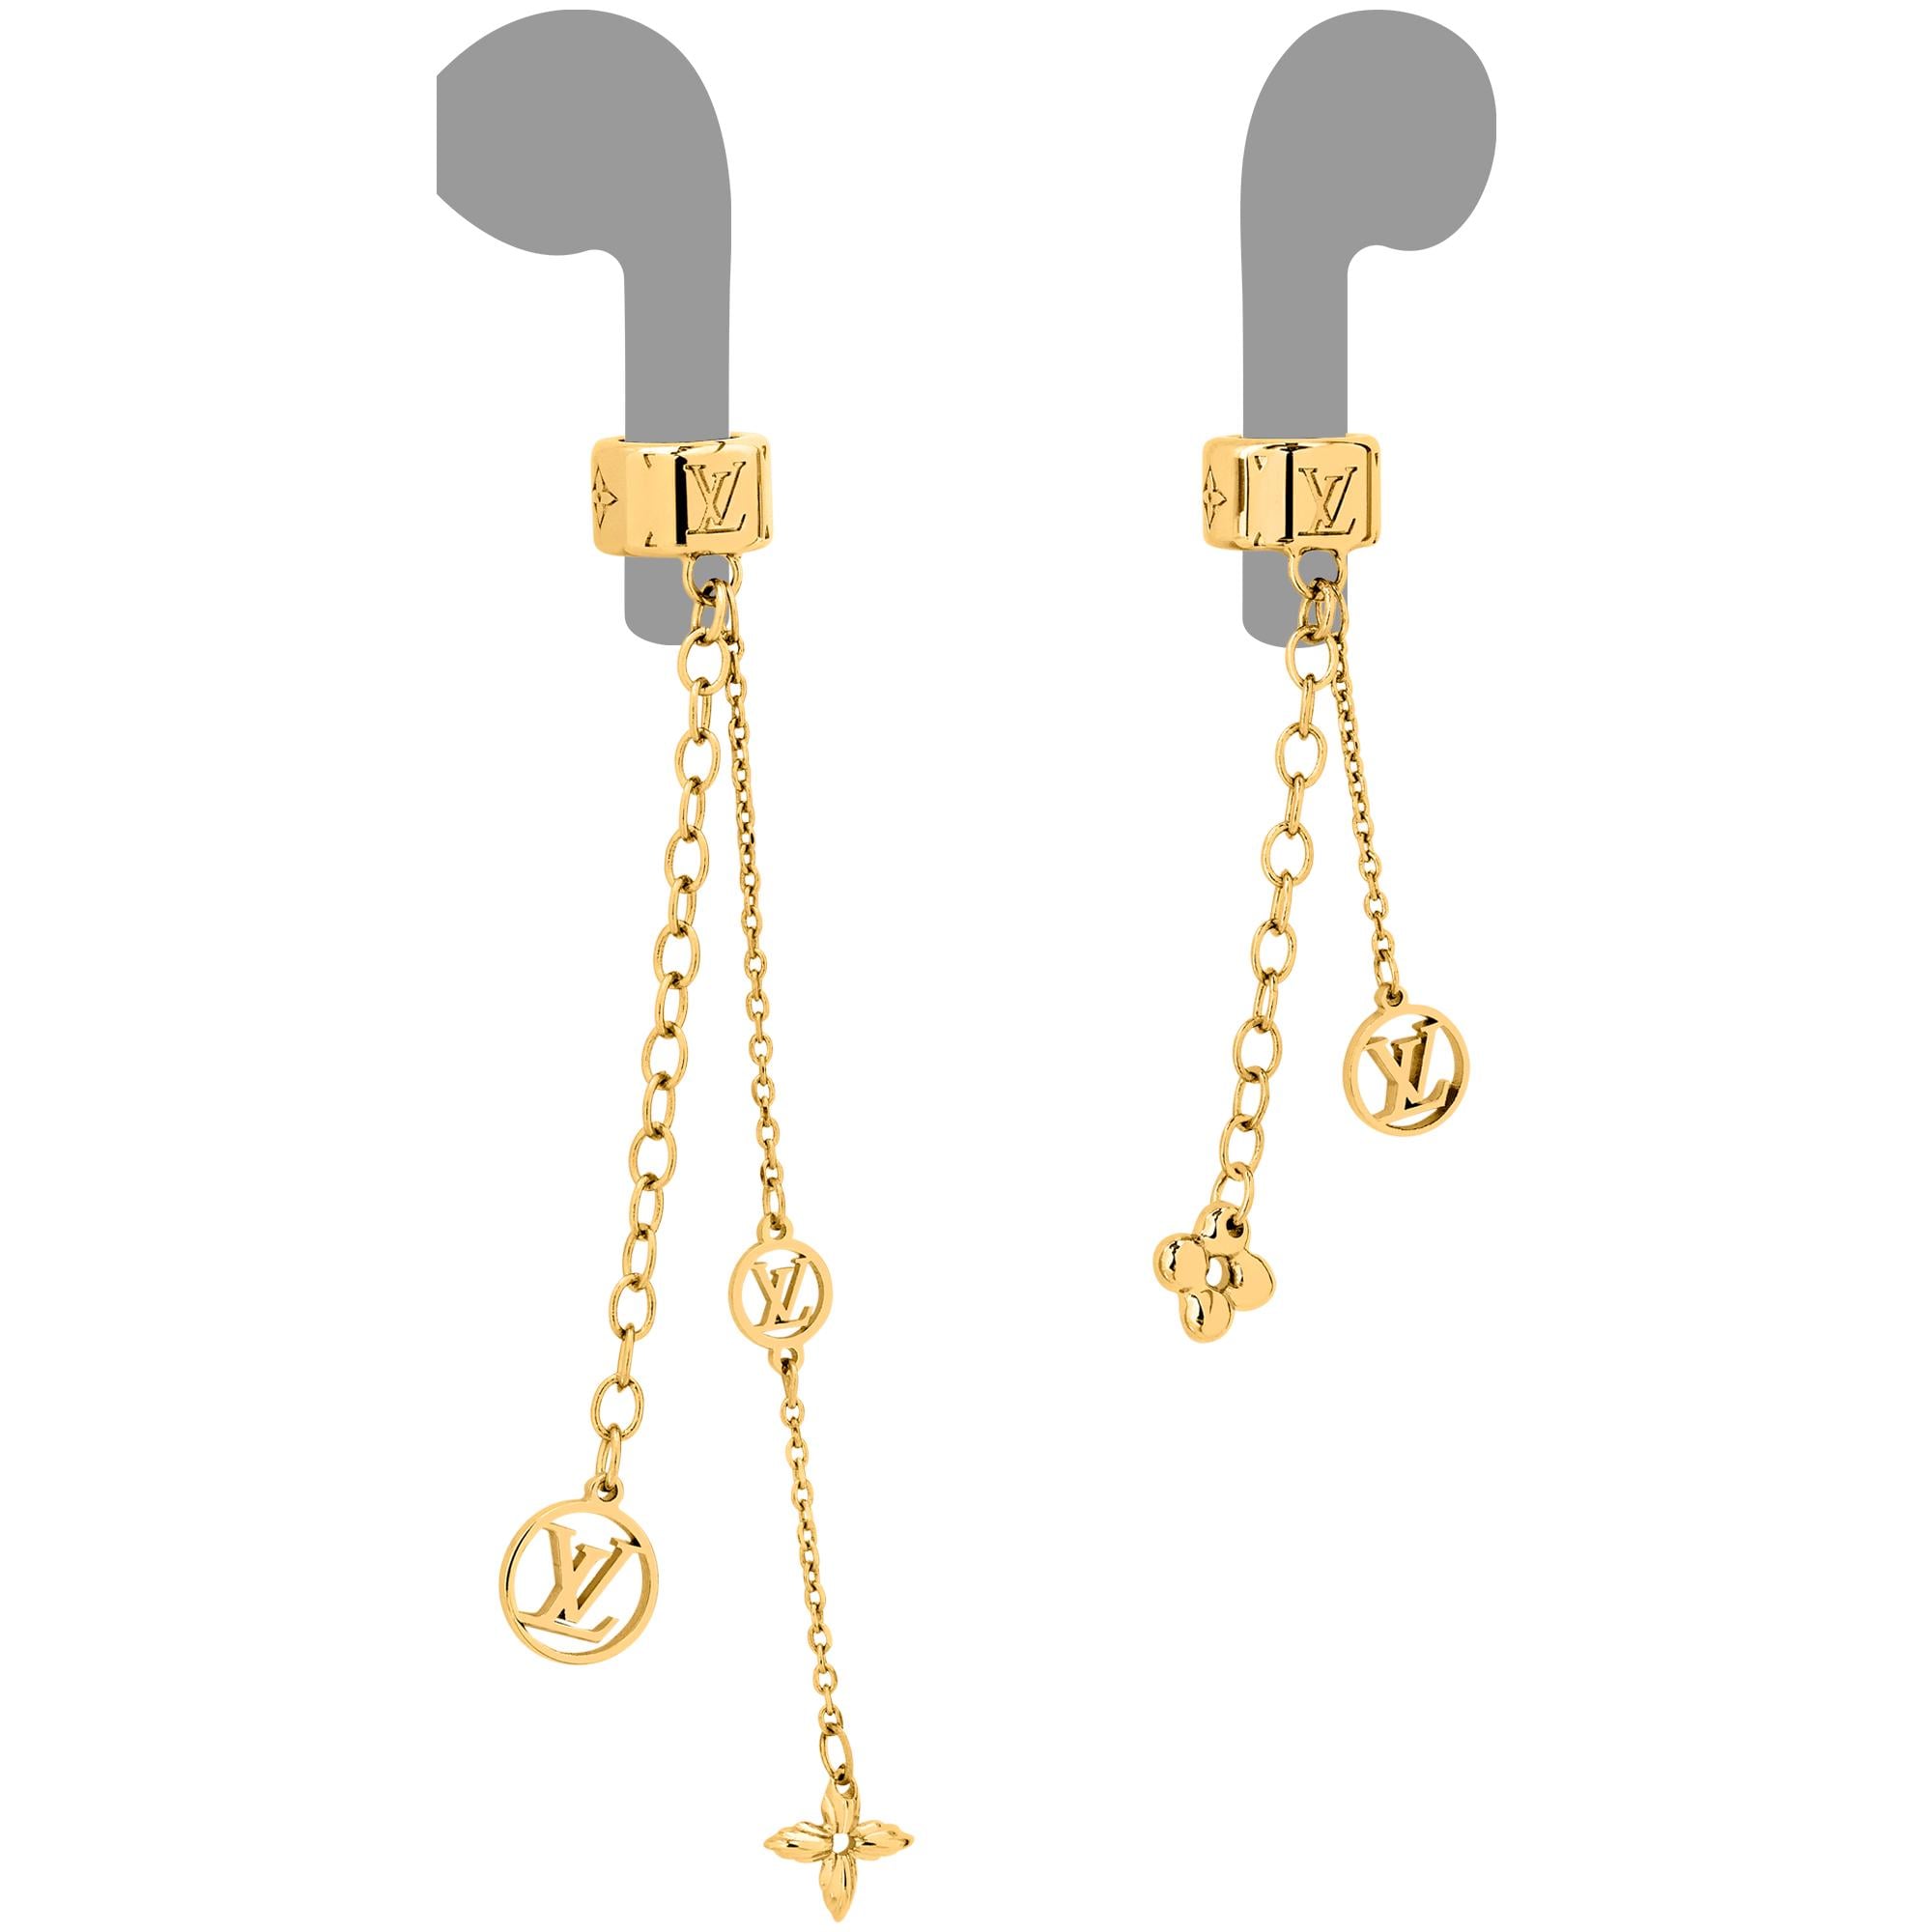 Shop Louis Vuitton Nanogram earrings (M00397) by BabyYuu